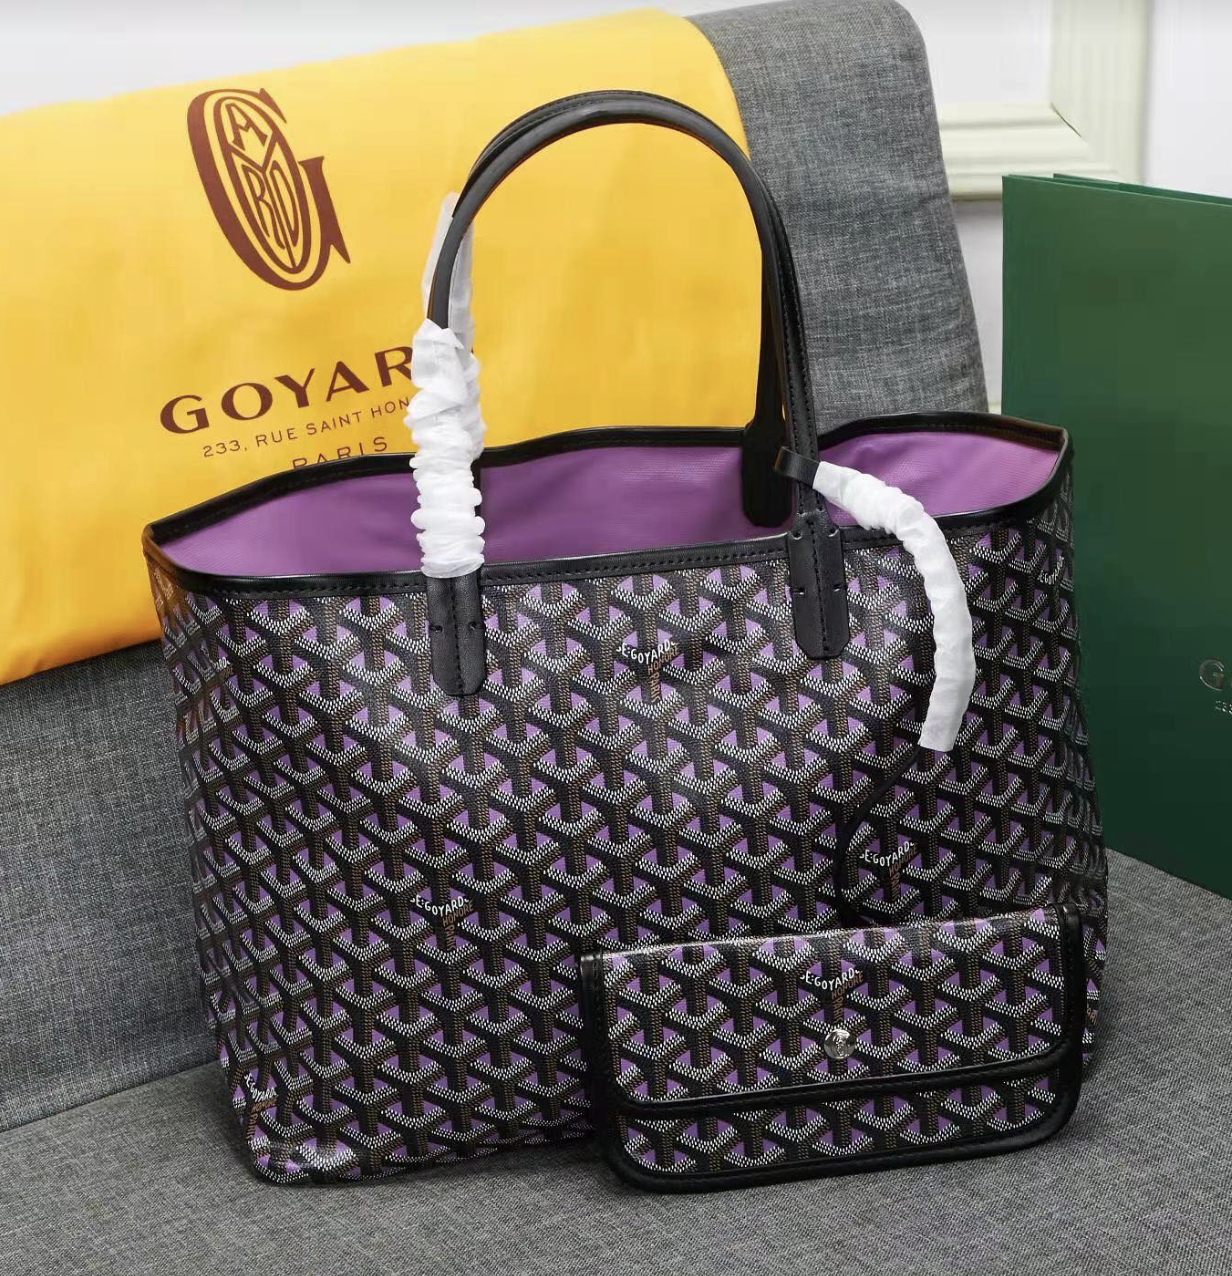 New Products : Goyard Bags